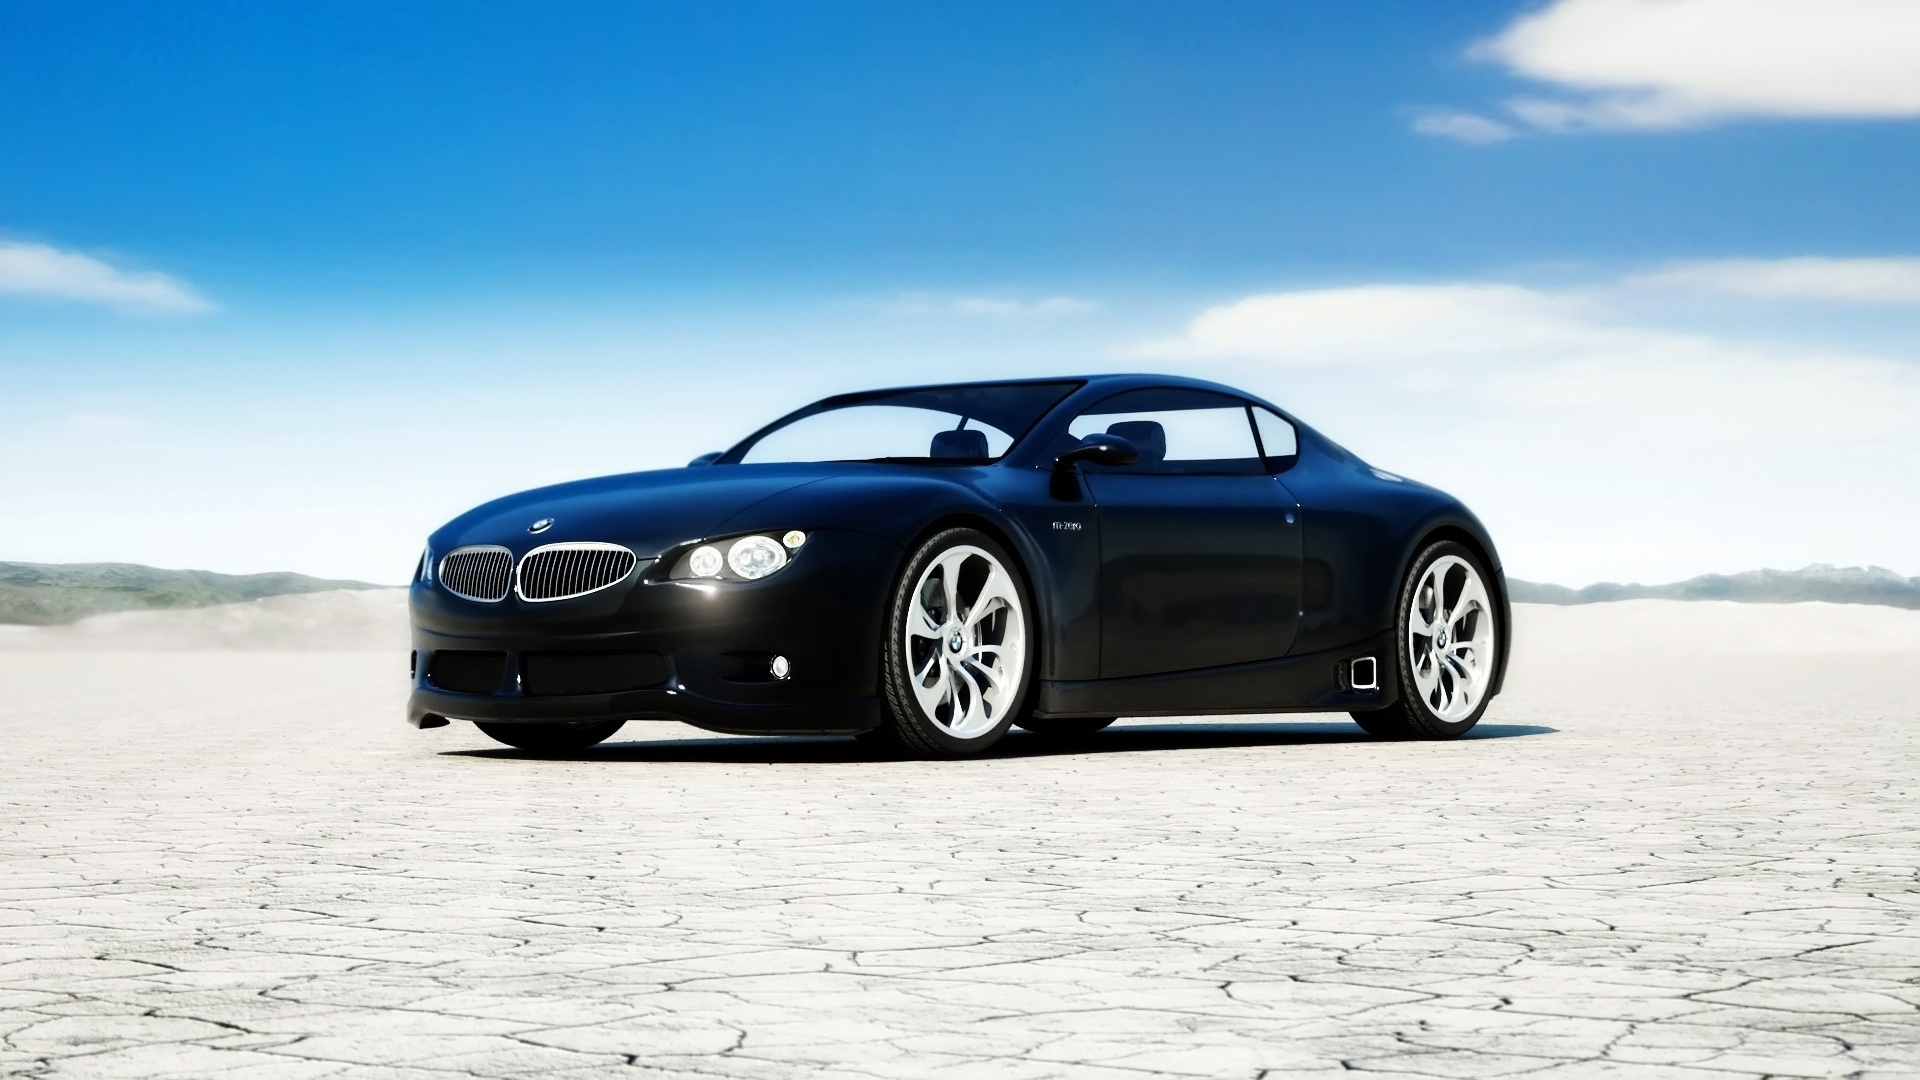 BMW M Zero Concept 2008 for 1920 x 1080 HDTV 1080p resolution